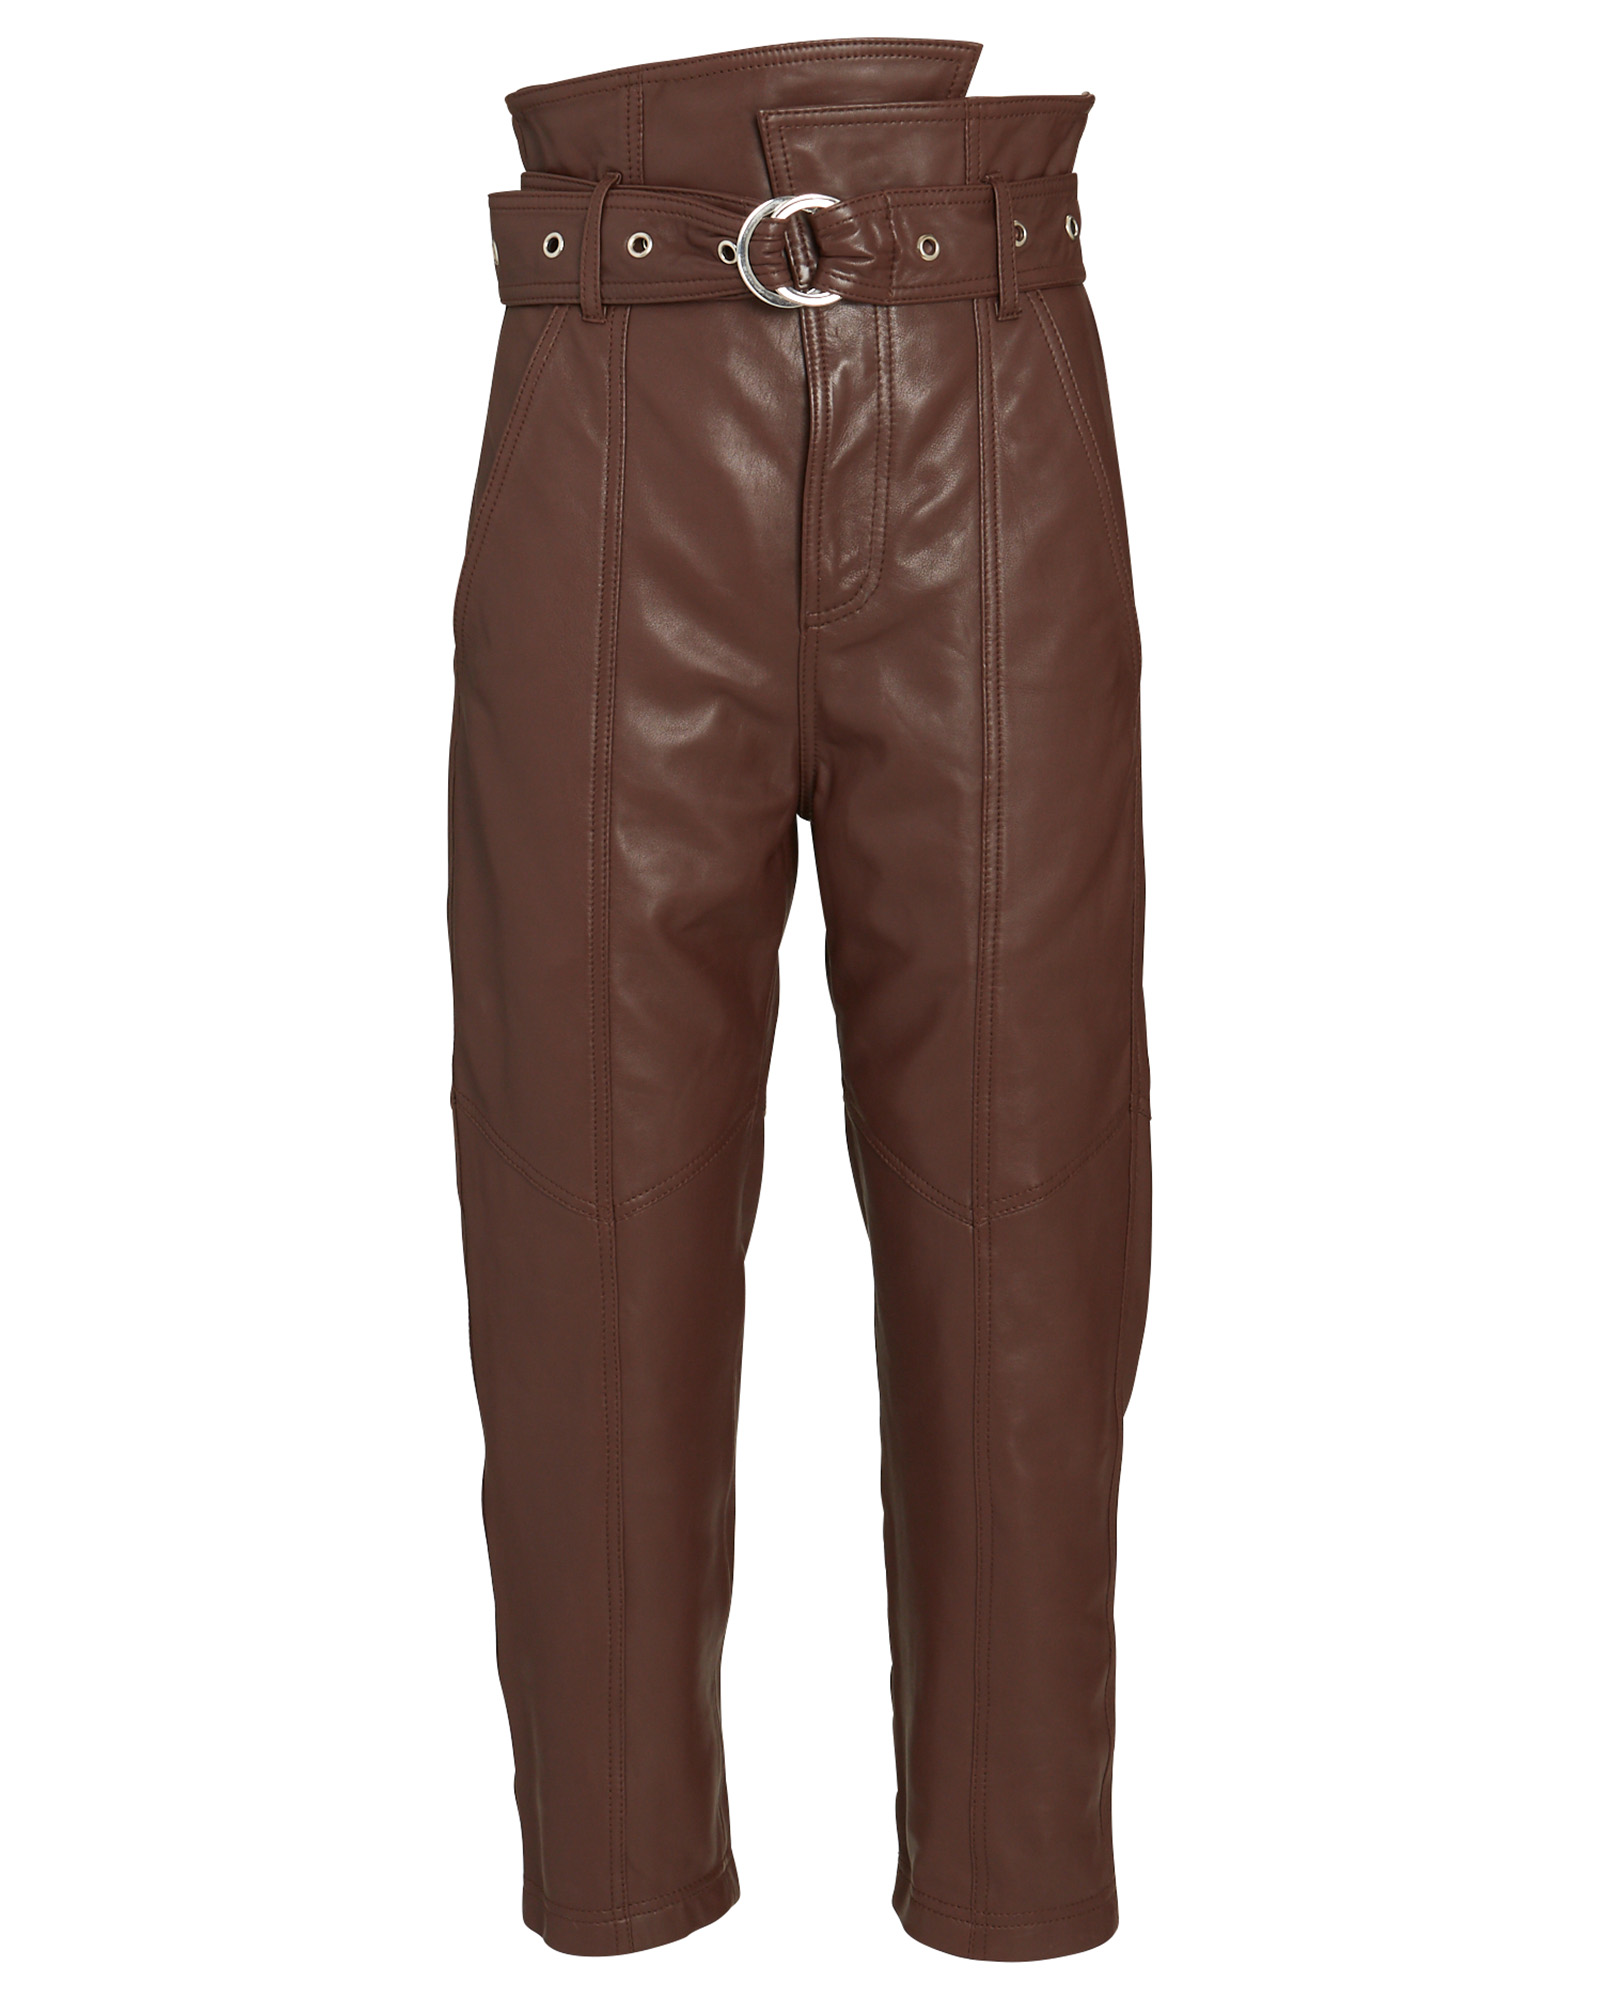 Marissa Webb Anniston Leather High-Rise Pants | INTERMIX®